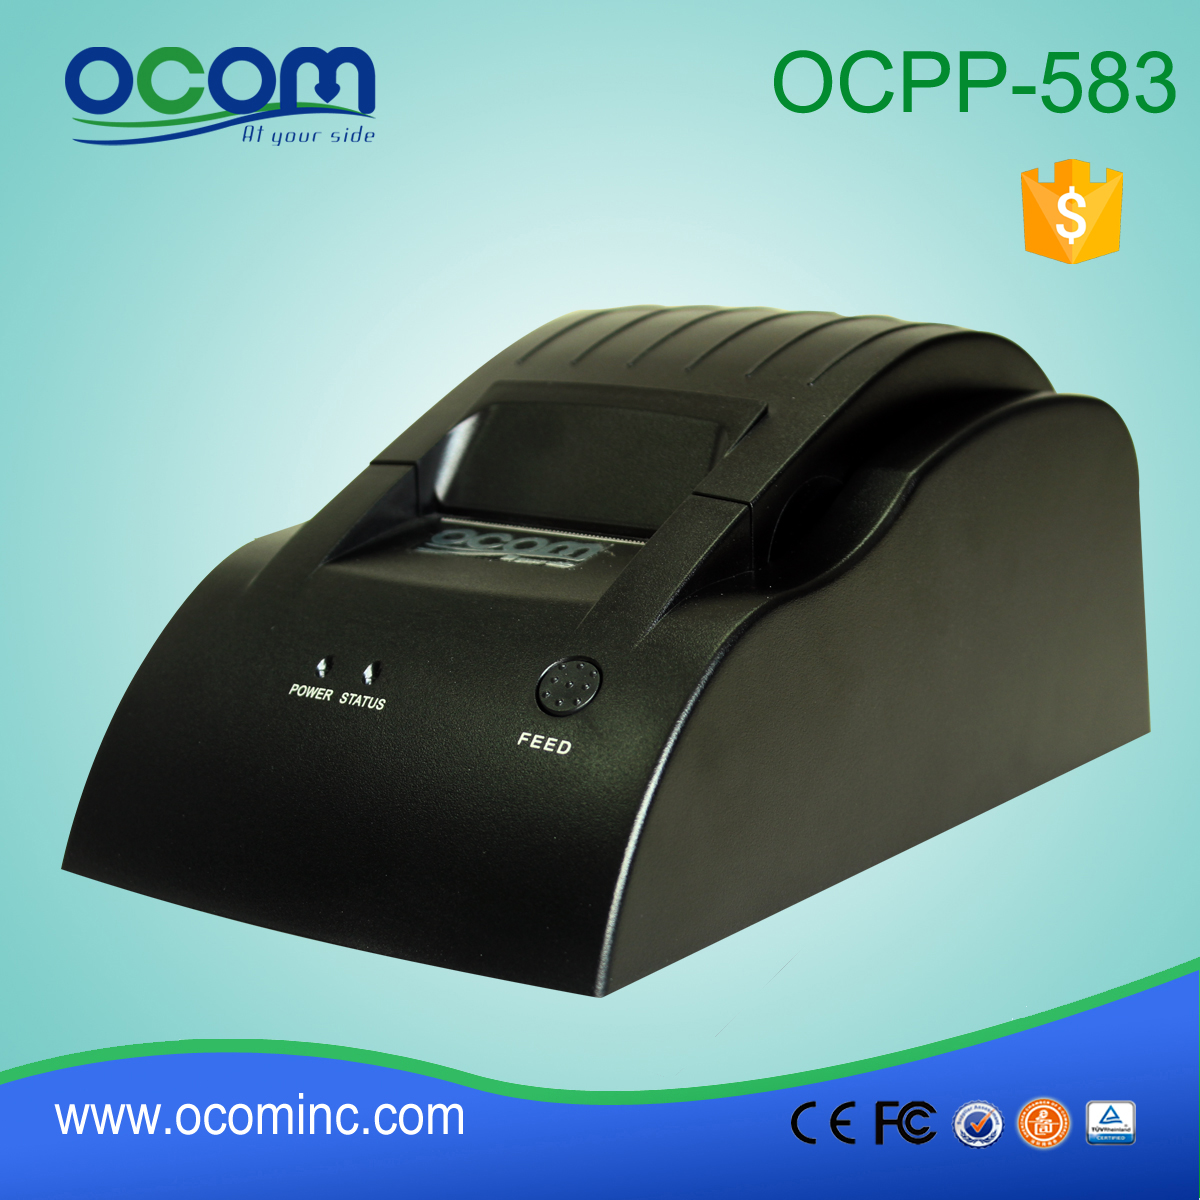 OCPP-583-P 58mm POS Thermal Ticket Receipt Printer 36p Parallel Port